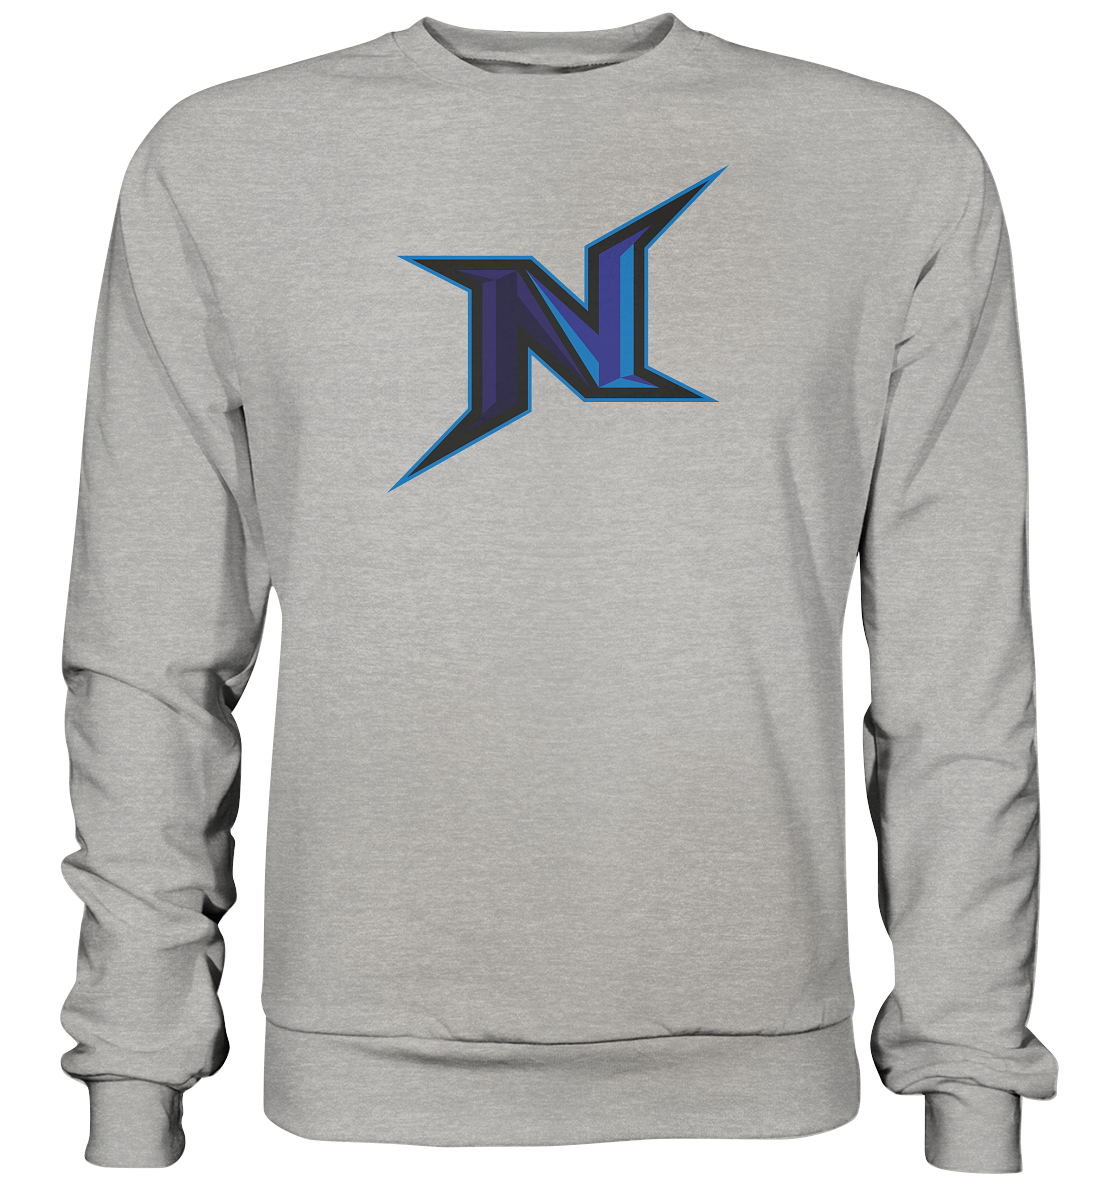 NEXUS ESPORT - Basic Sweatshirt